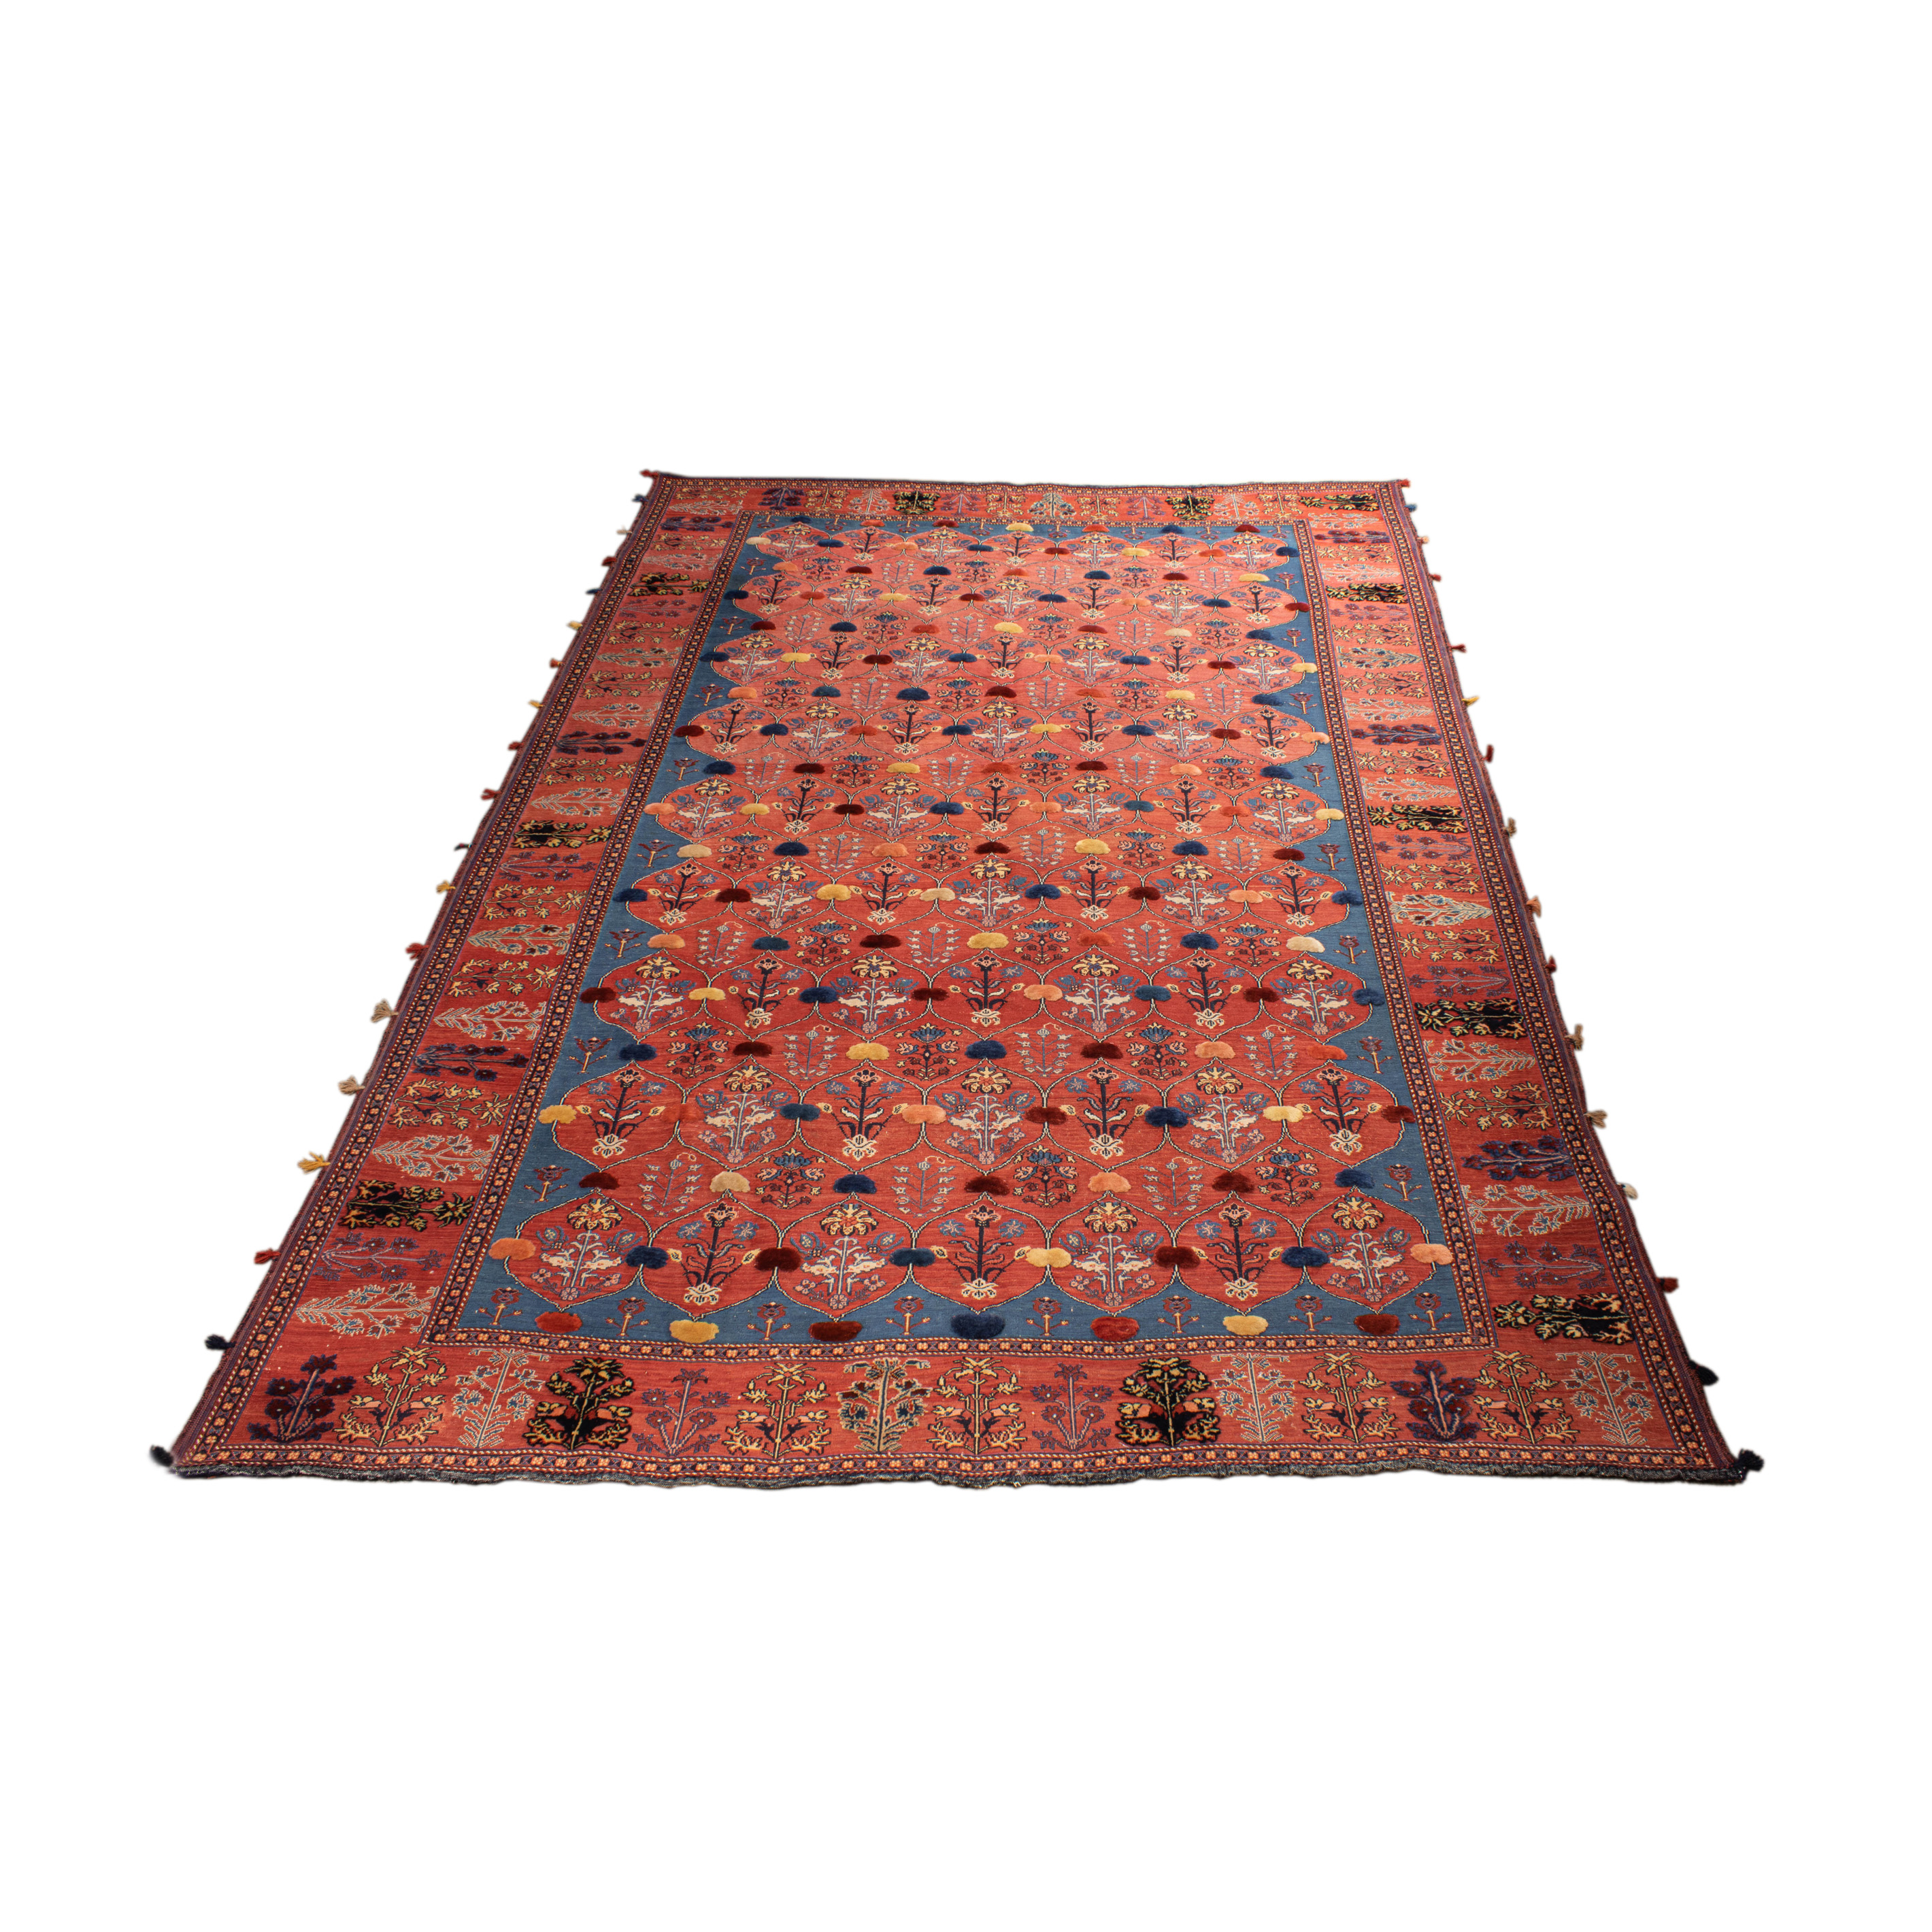 KURDISH CARPET Kurdish carpet  2d1d1b